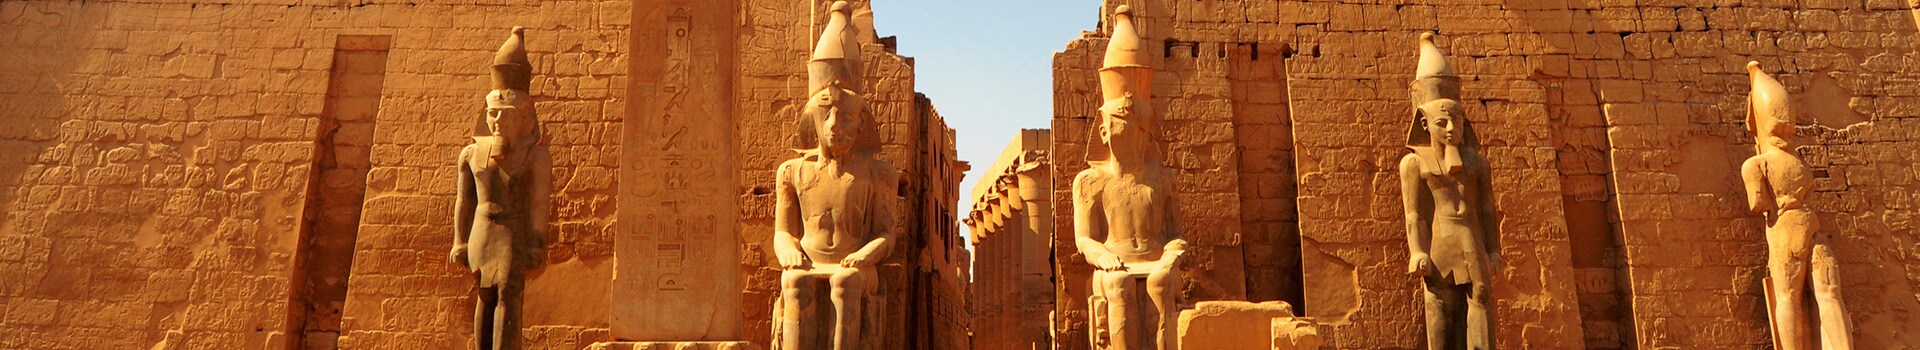 Luxor intl